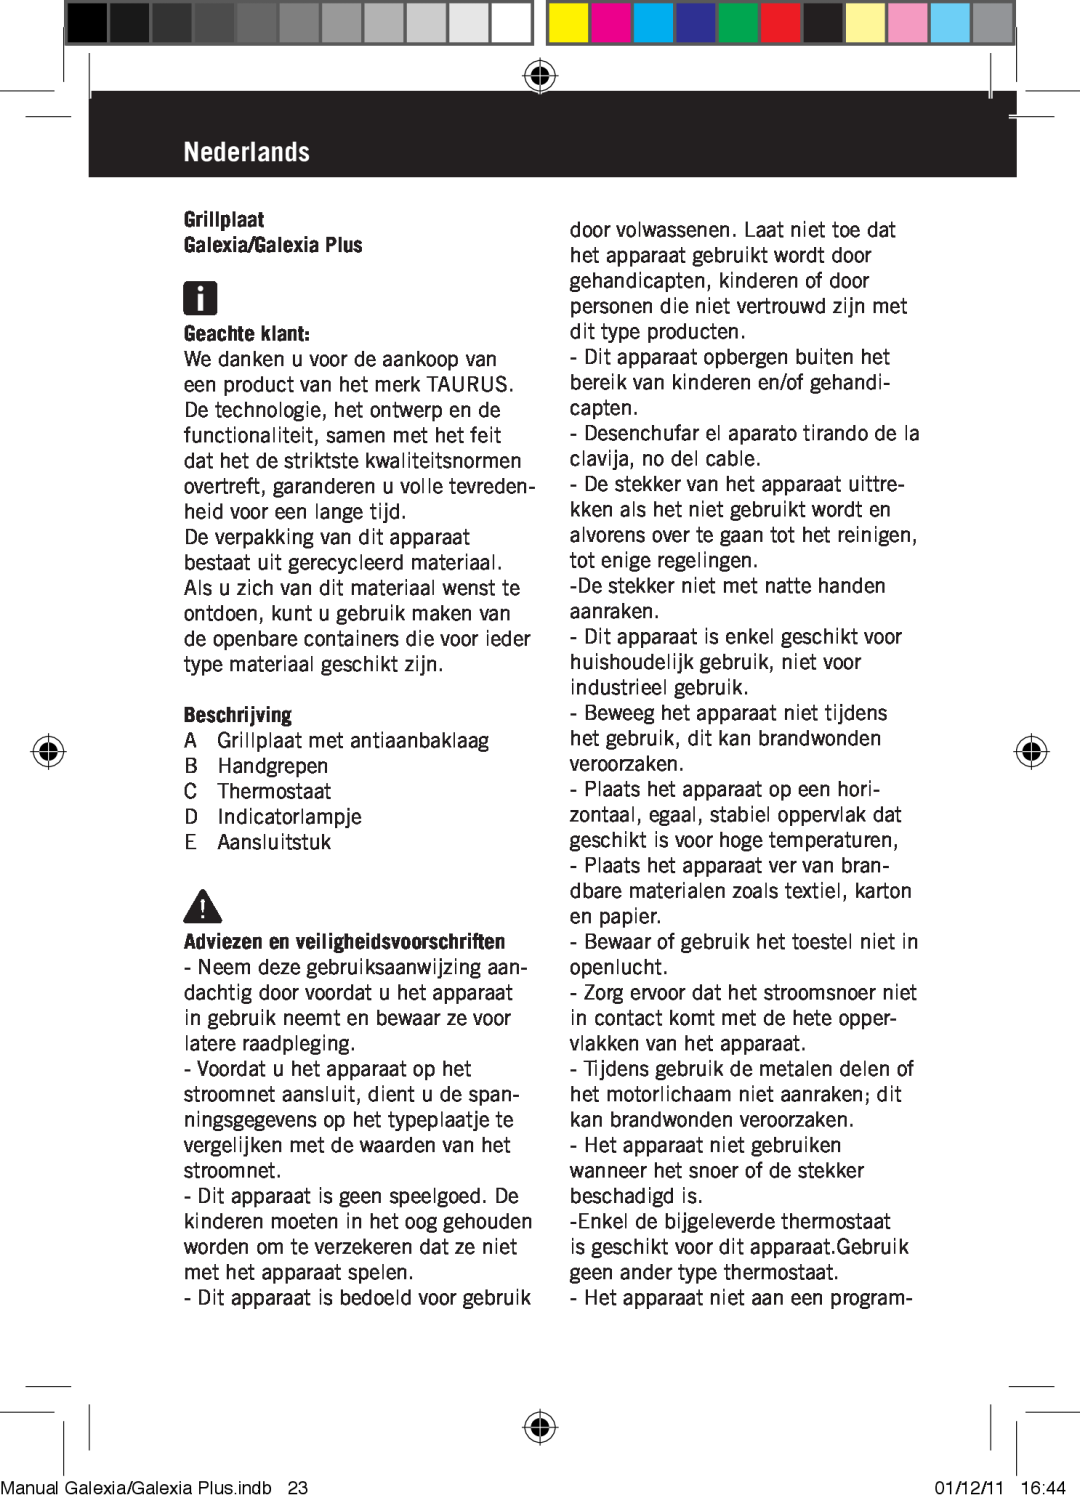 Taurus Group manual Nederlands, Grillplaat Galexia/Galexia Plus Geachte klant, Beschrijving 